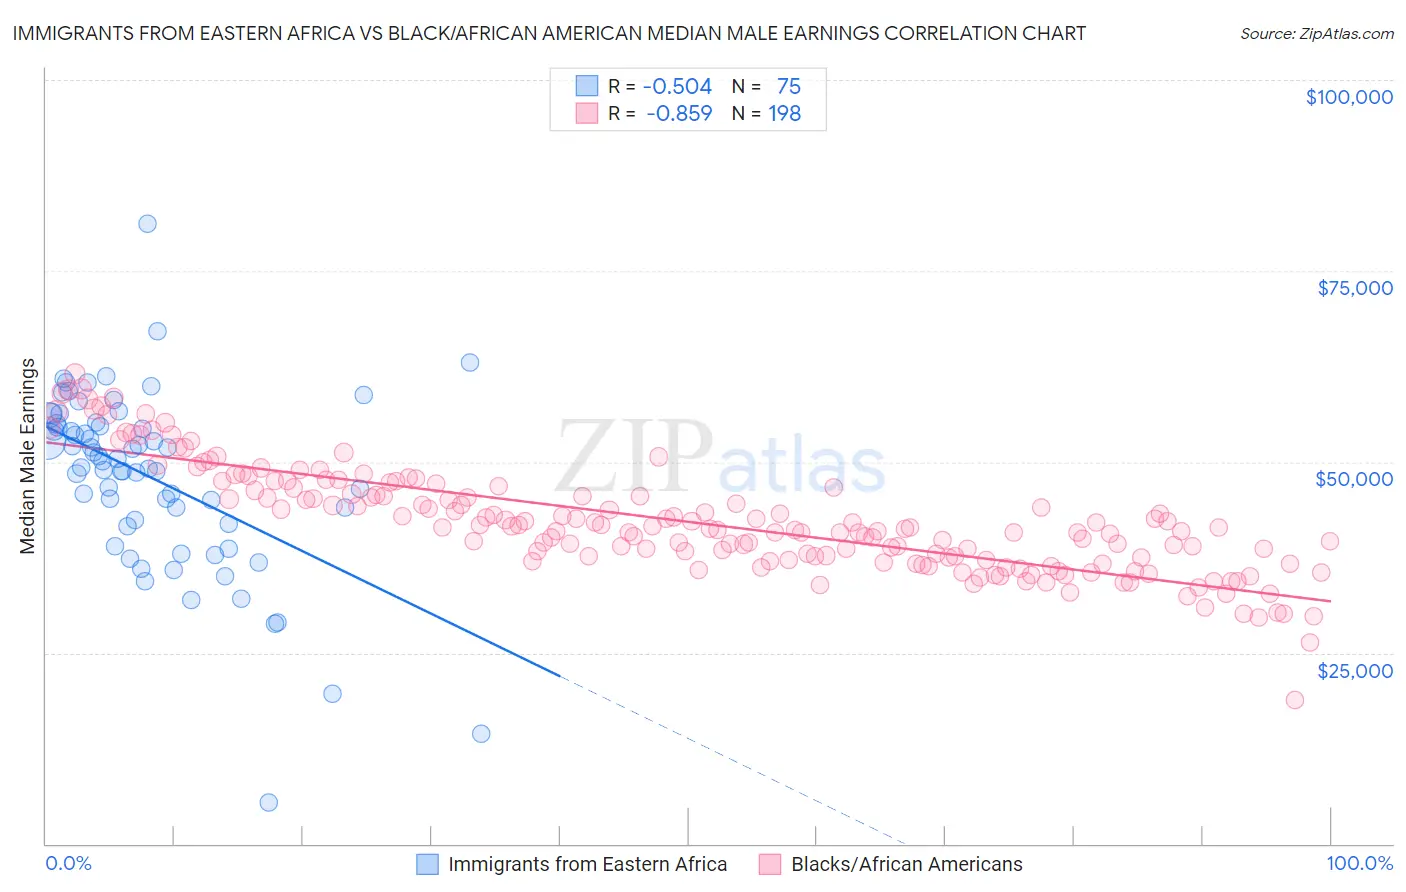 Immigrants from Eastern Africa vs Black/African American Median Male Earnings